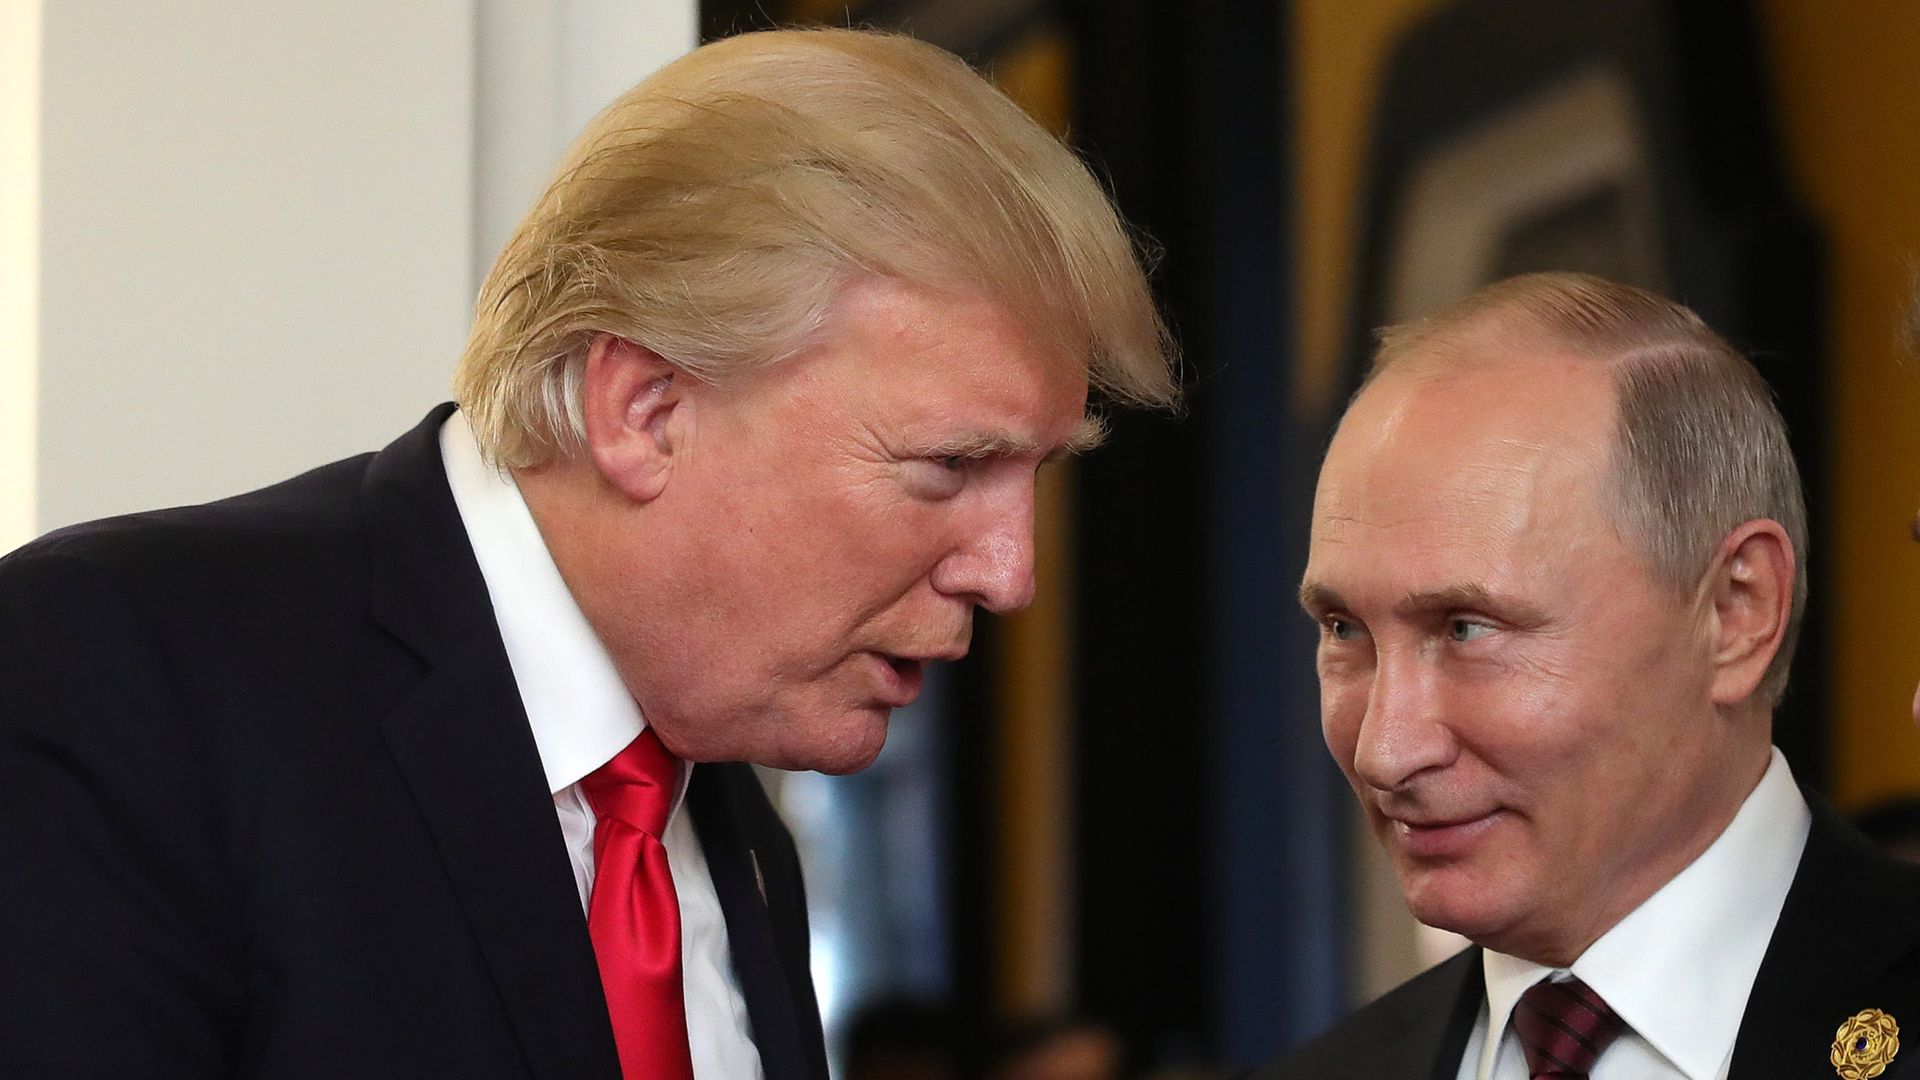 Trump speaks with Putin